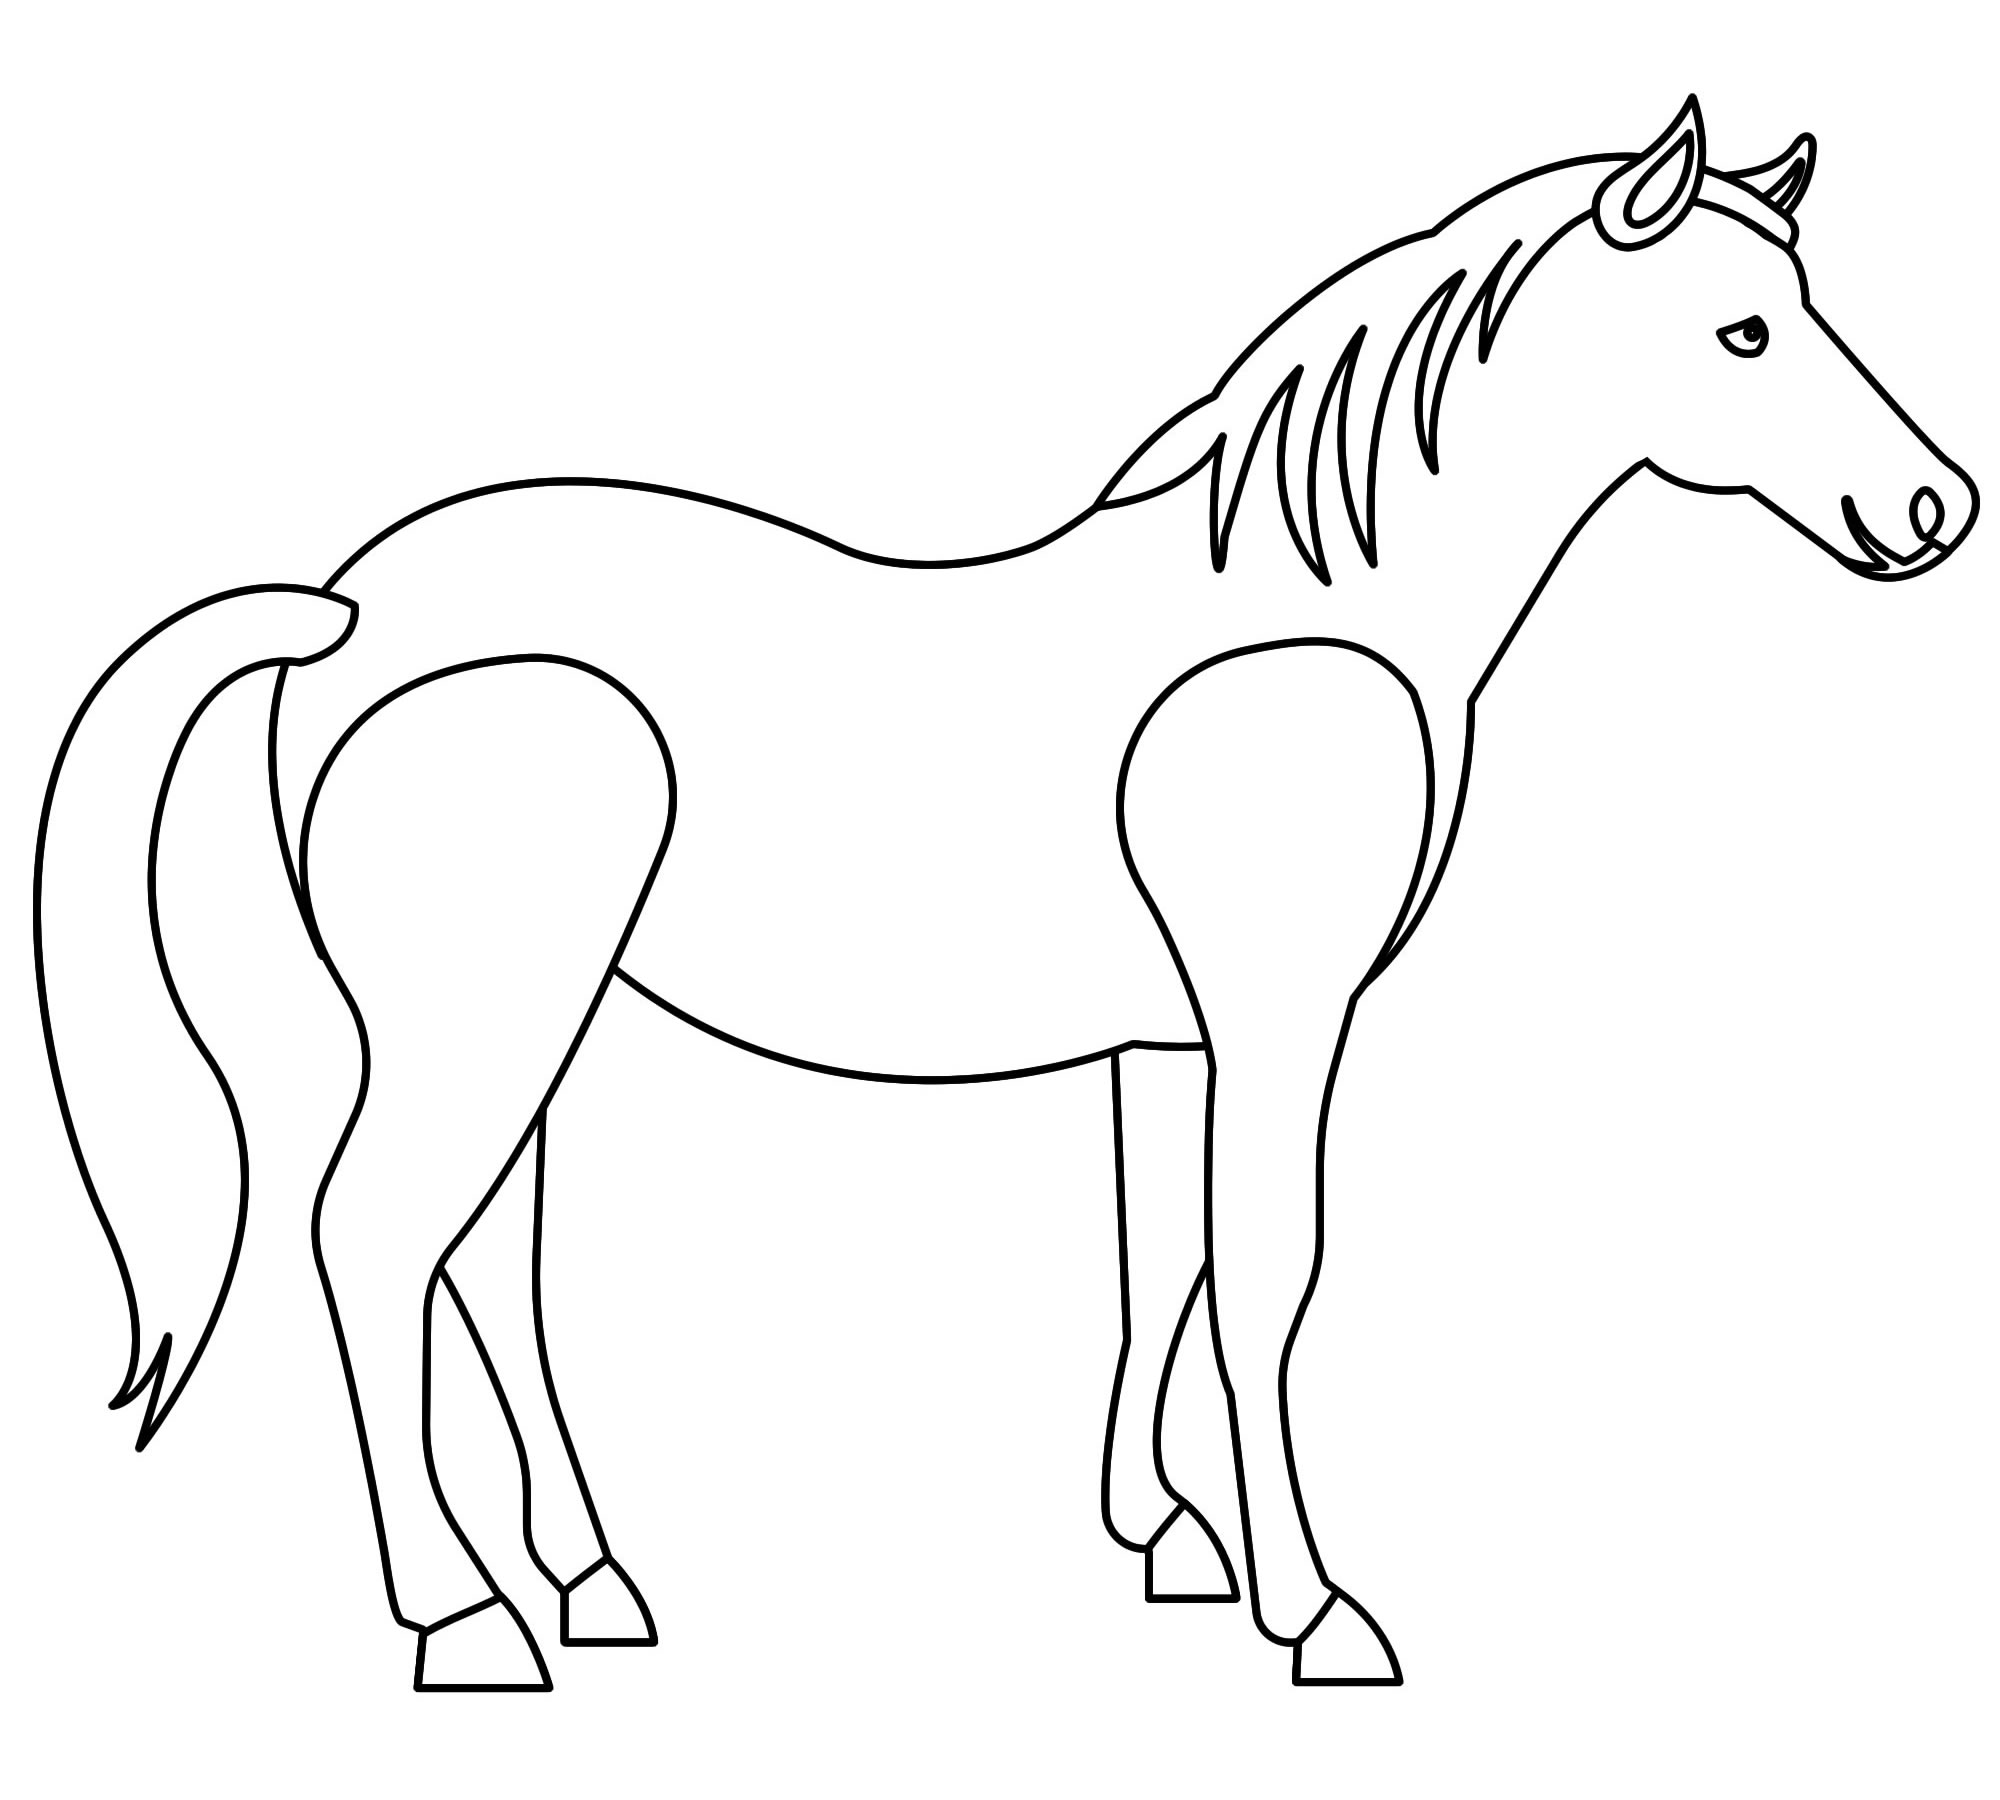 Раскрашивая раскраски, узнаем легенды о лошадях